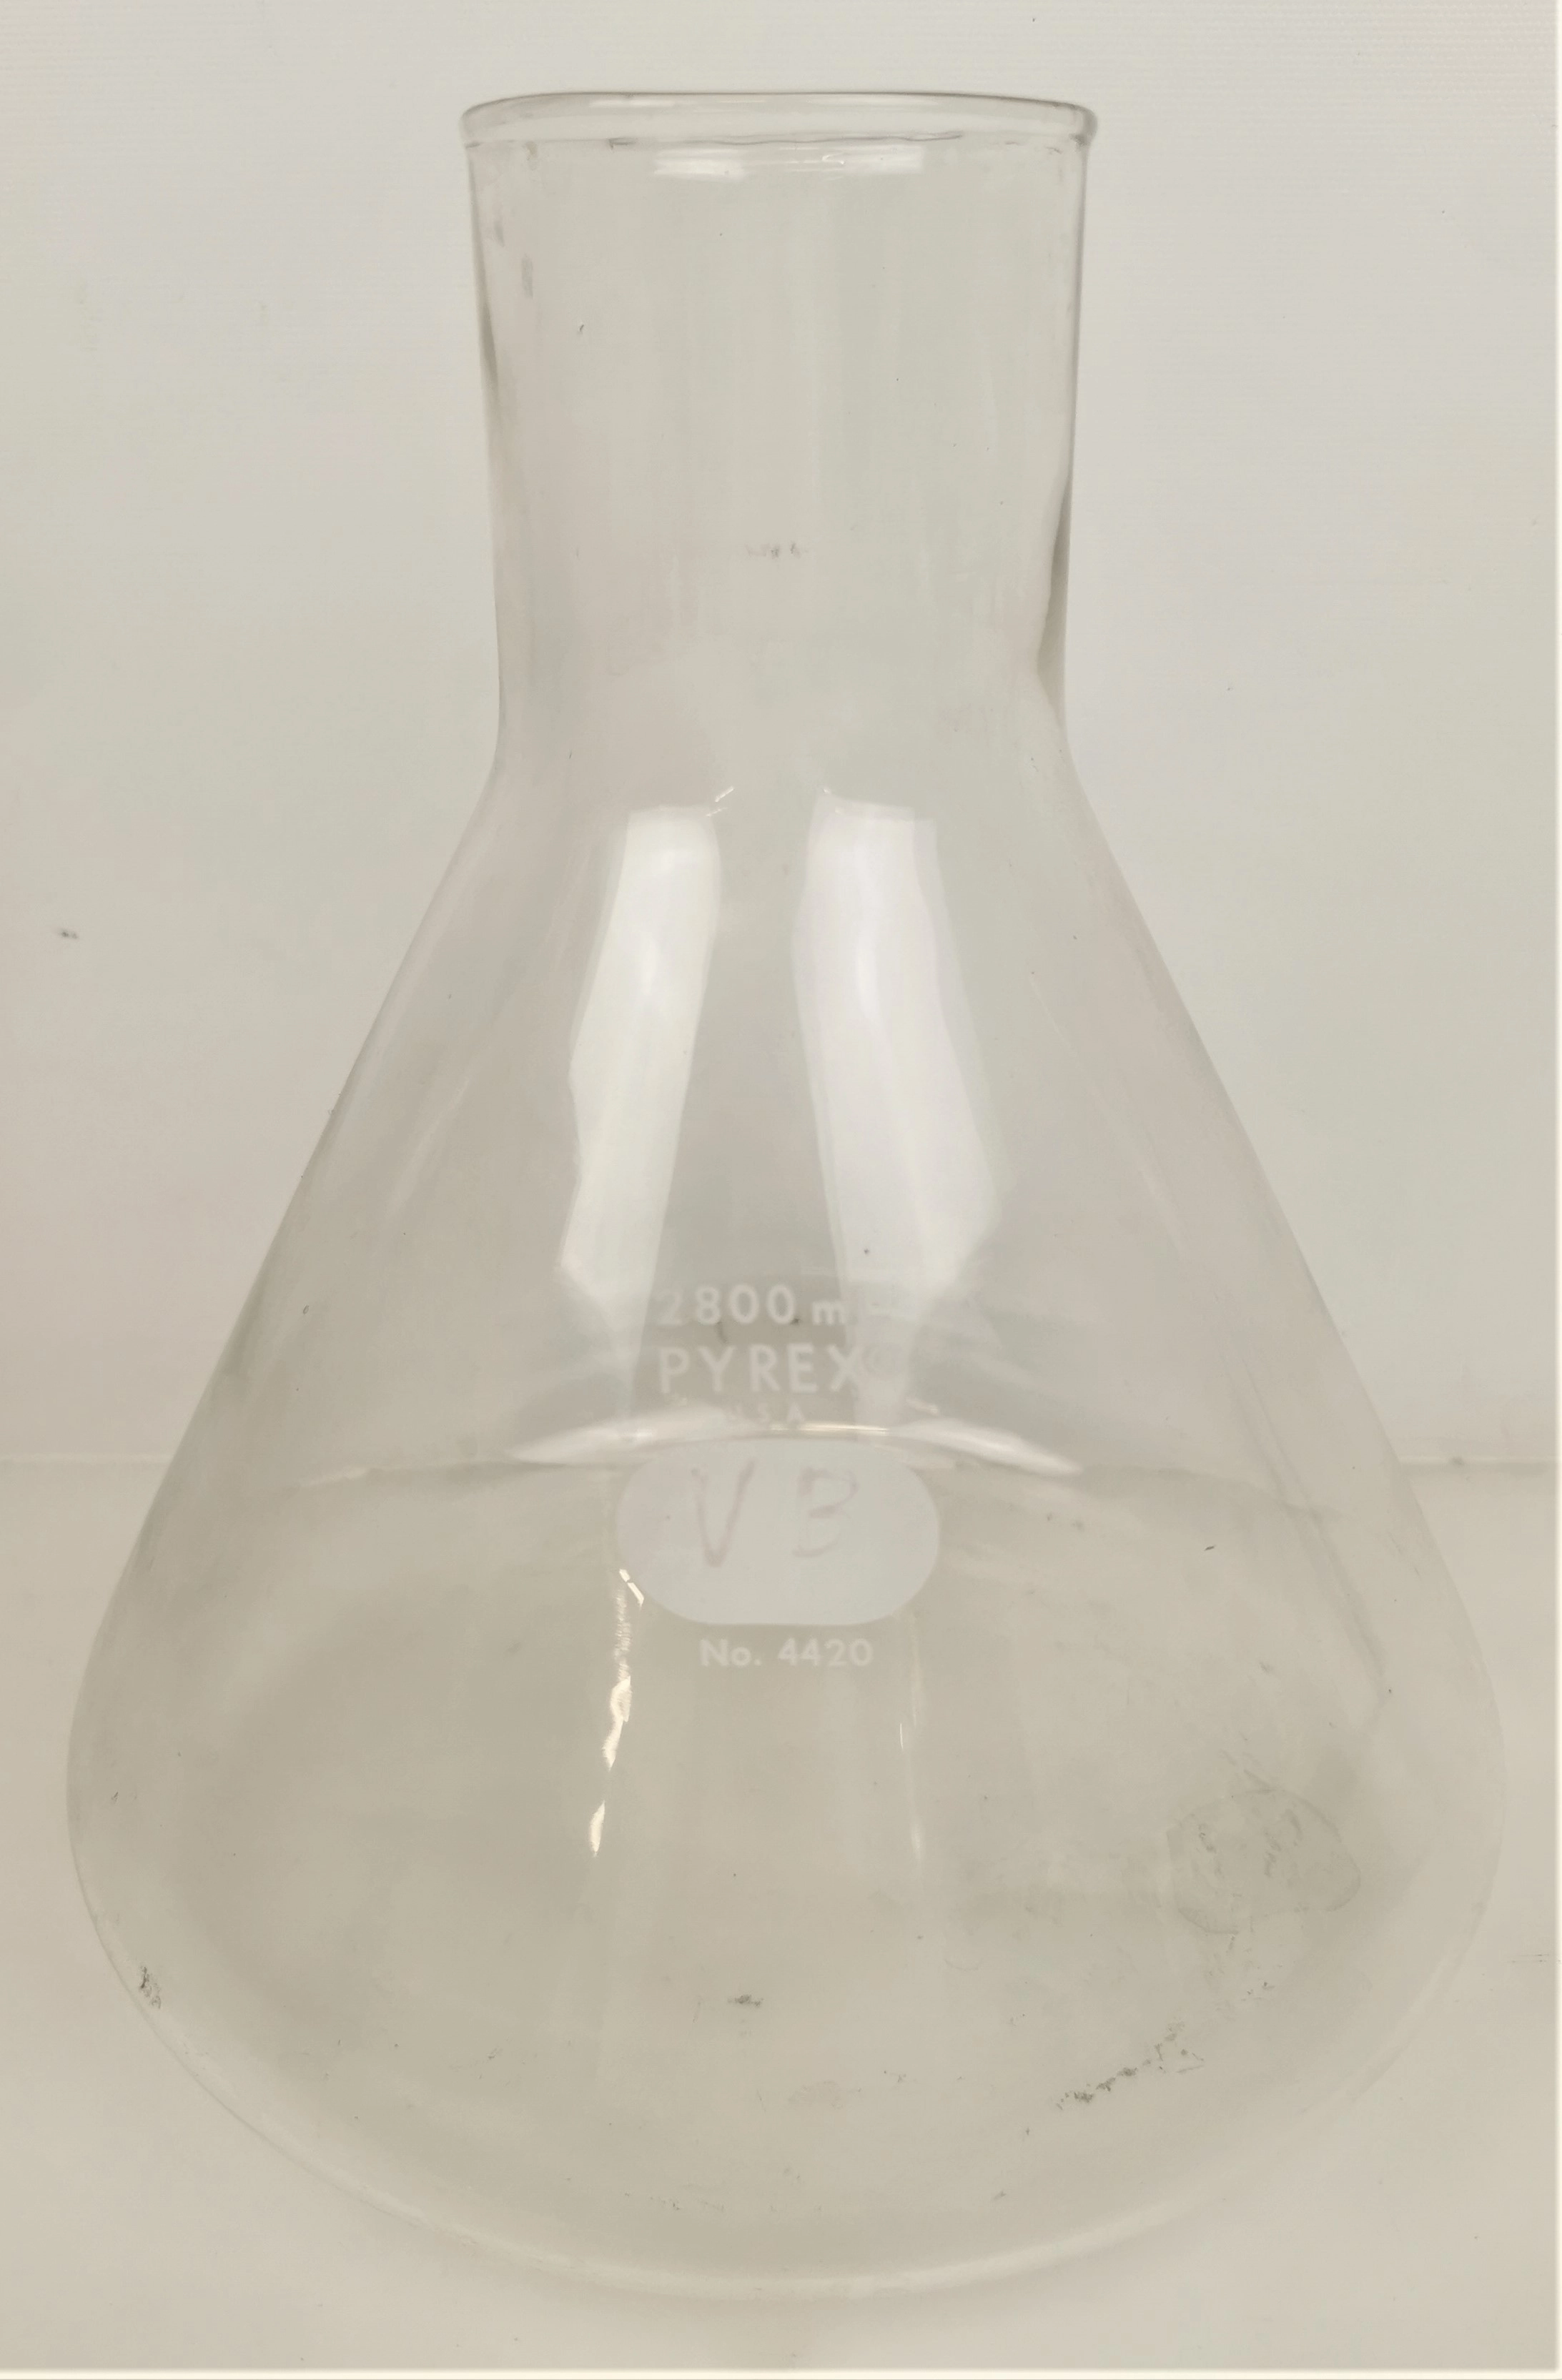 Corning PYREX 4420-2XL Fernbach-Style Culture Flask - 2800mL